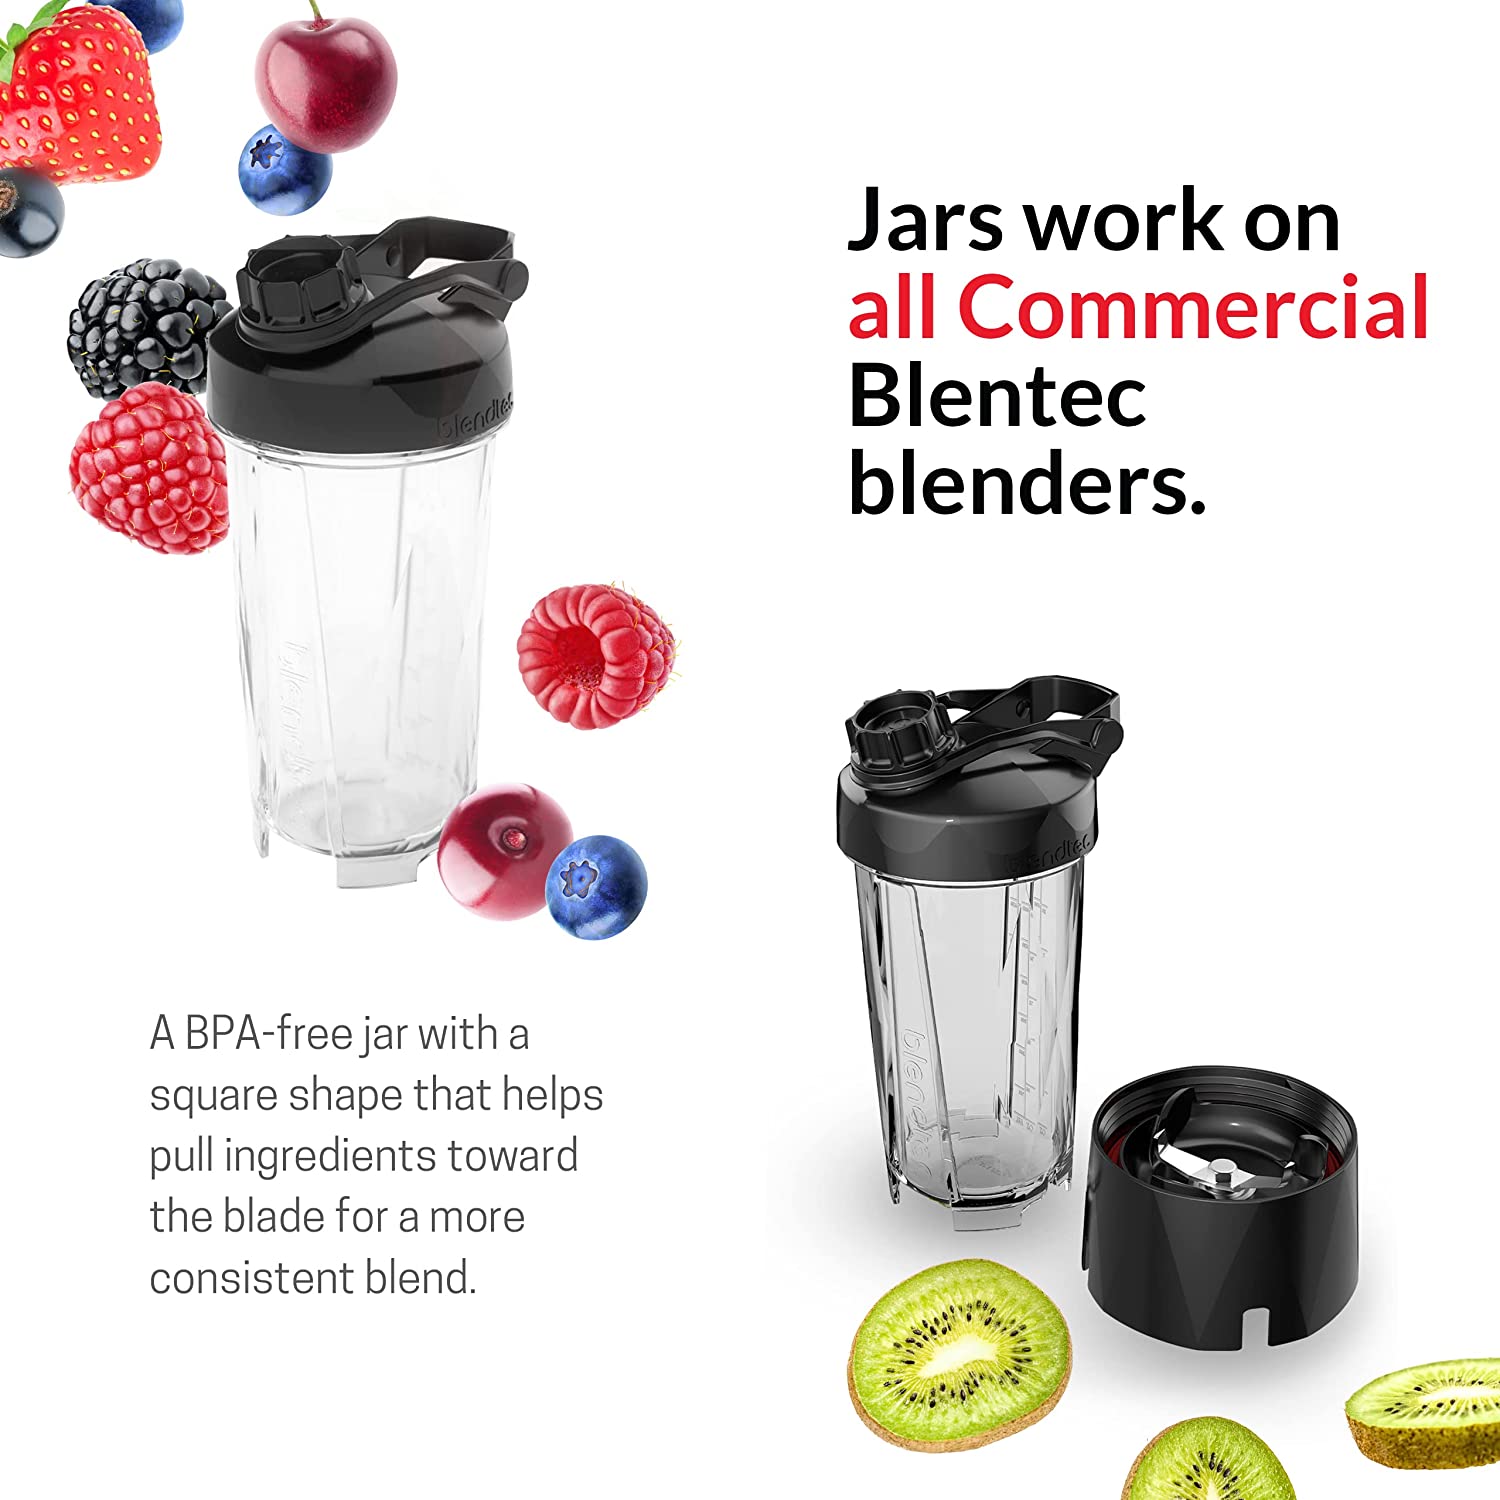 Blendtec Jars, Size Options